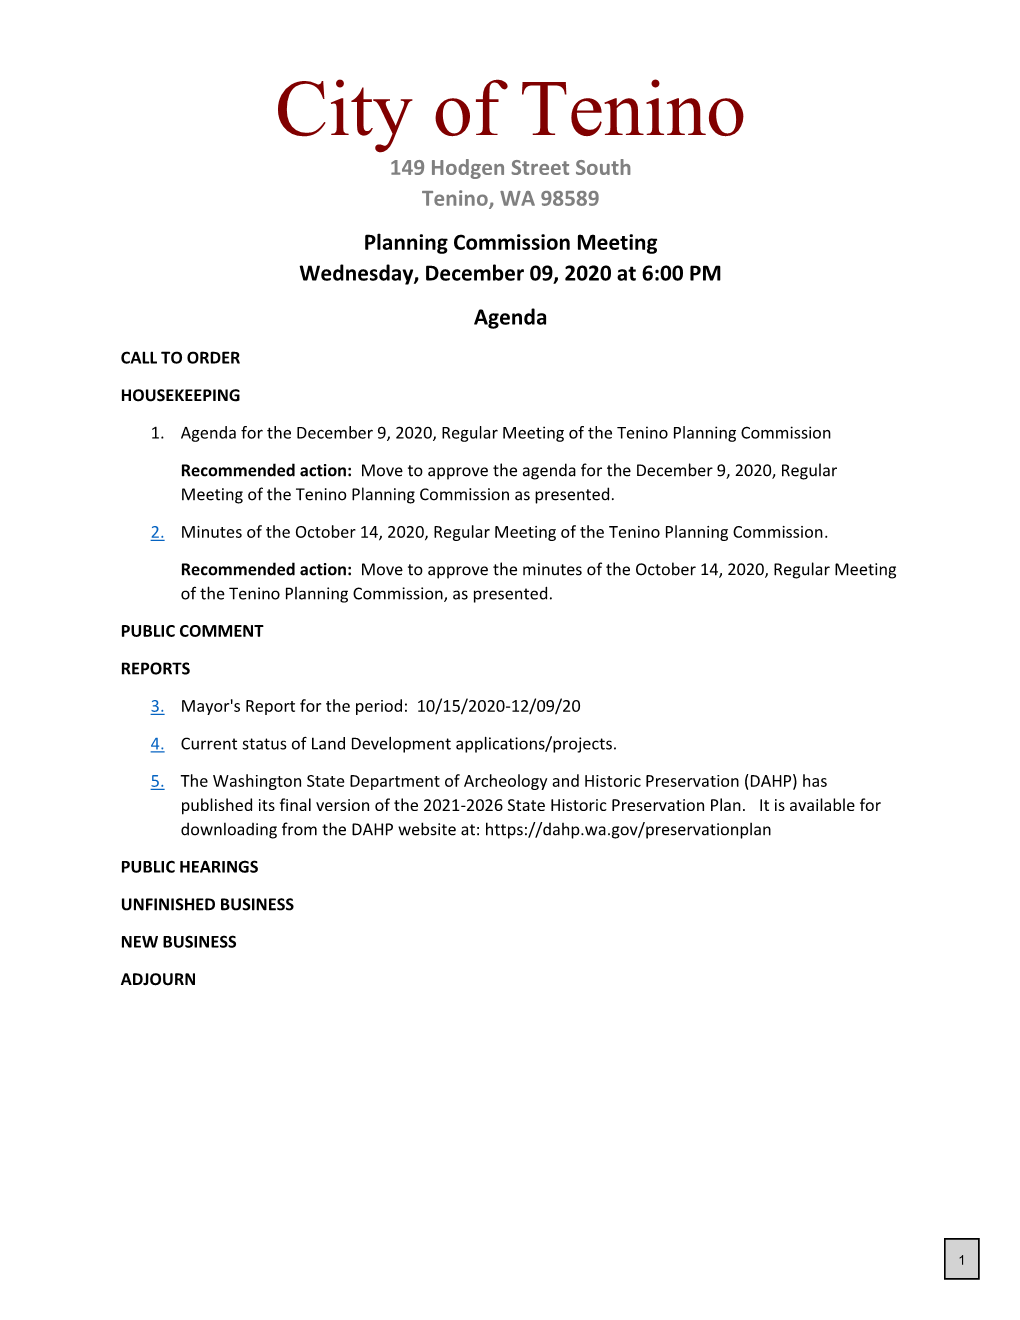 City of Tenino 149 Hodgen Street South Tenino, WA 98589 Planning Commission Meeting Wednesday, December 09, 2020 at 6:00 PM Agenda